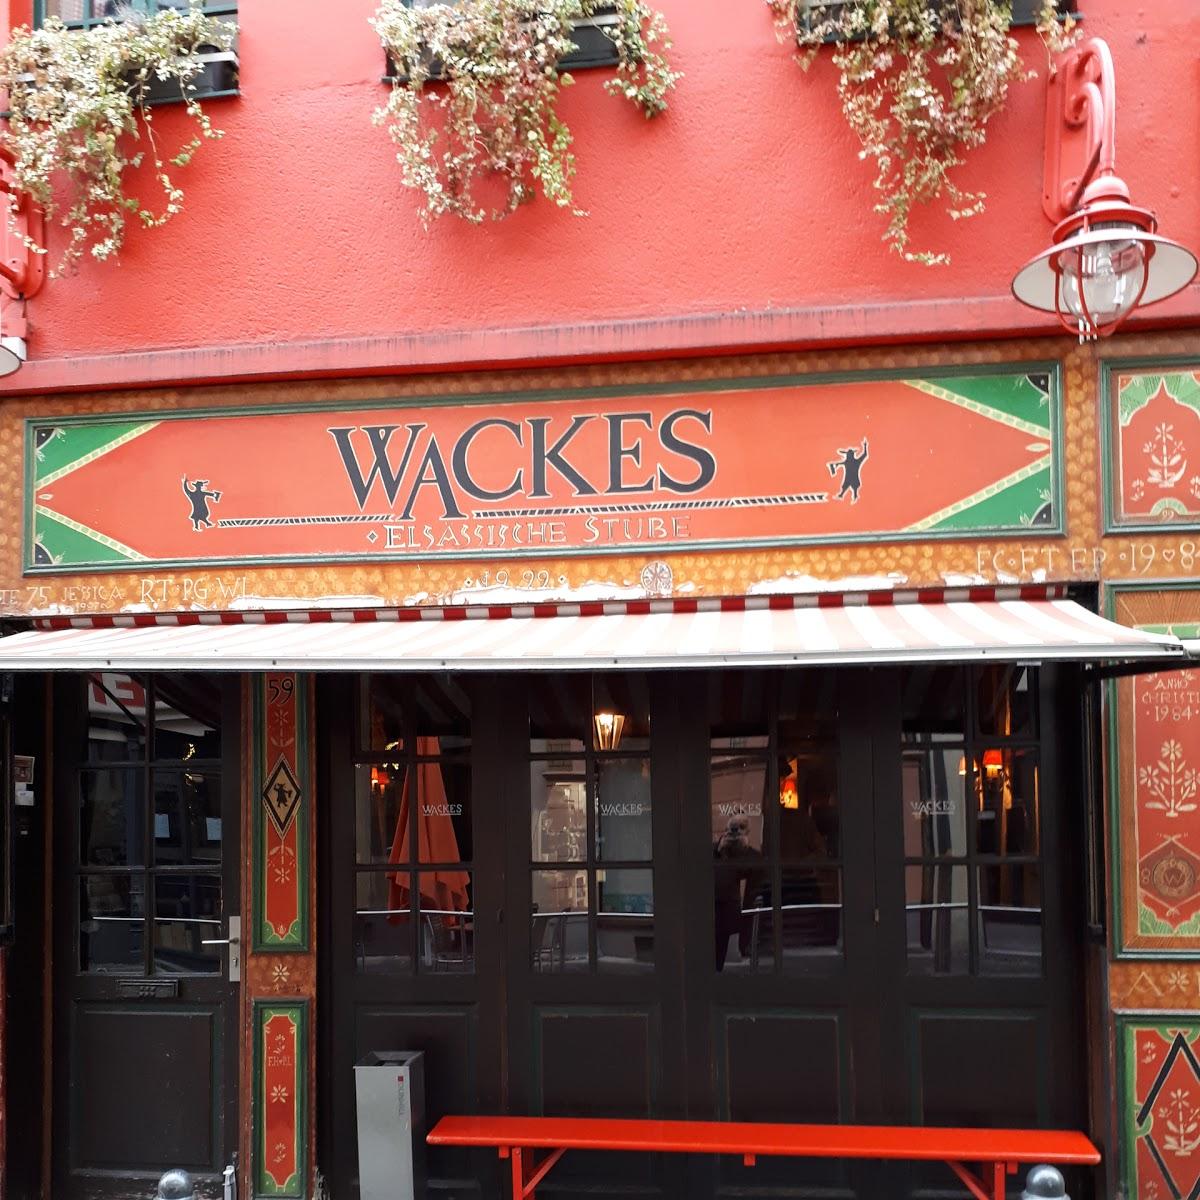 Restaurant "Wackes" in Köln